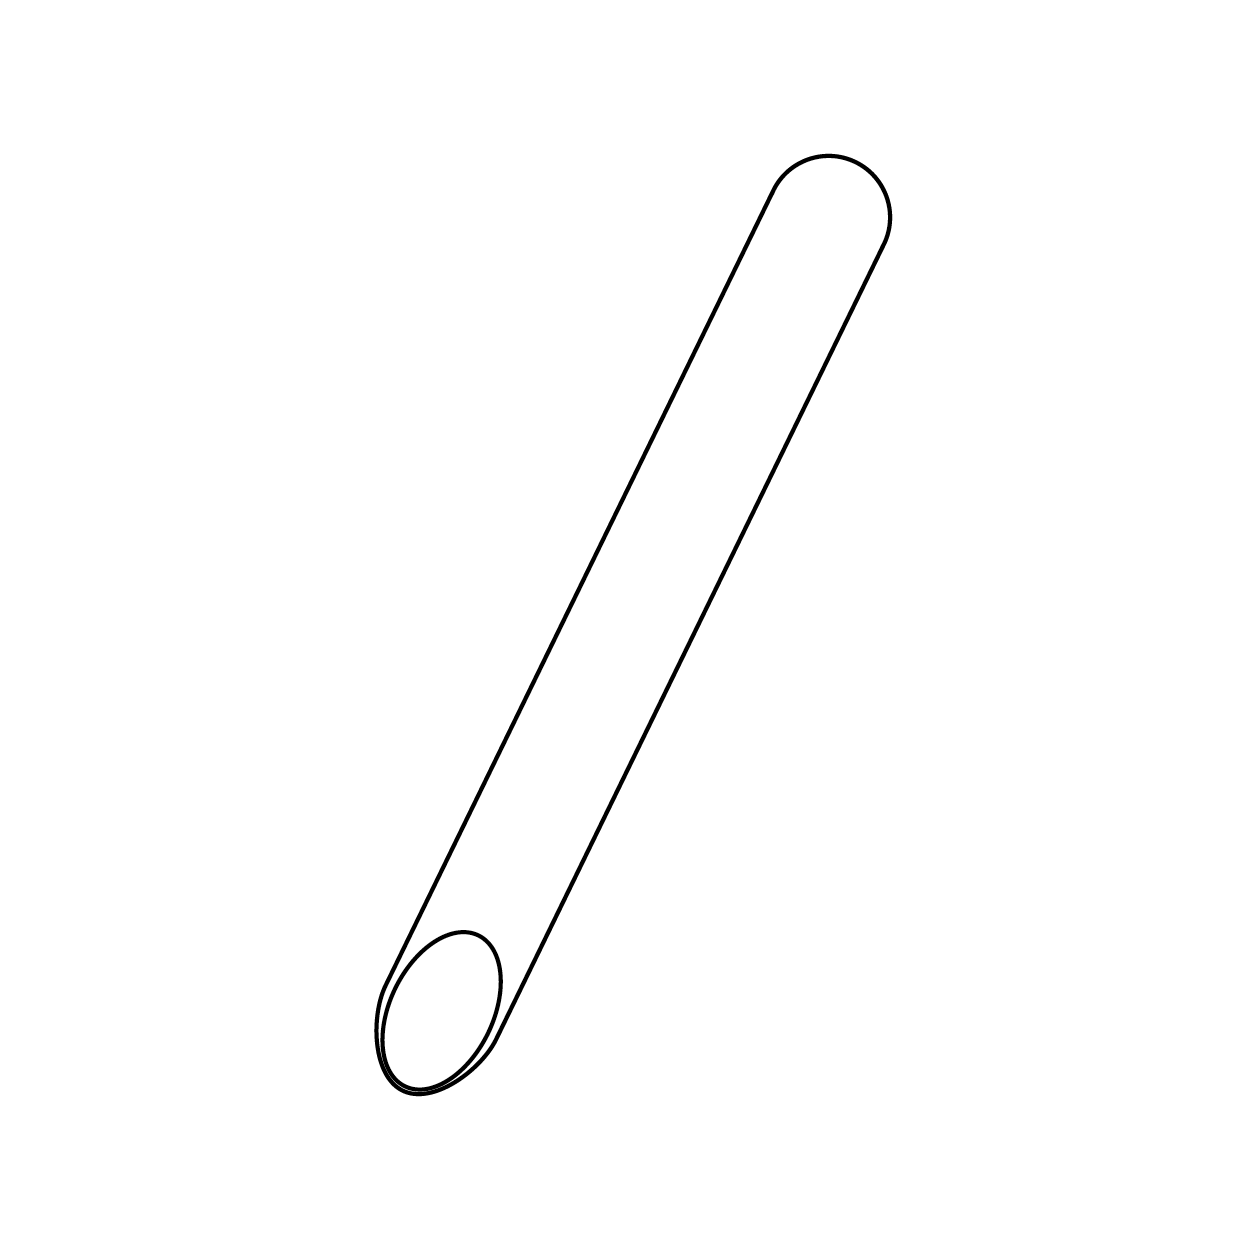 Illustration of a cervical spoon